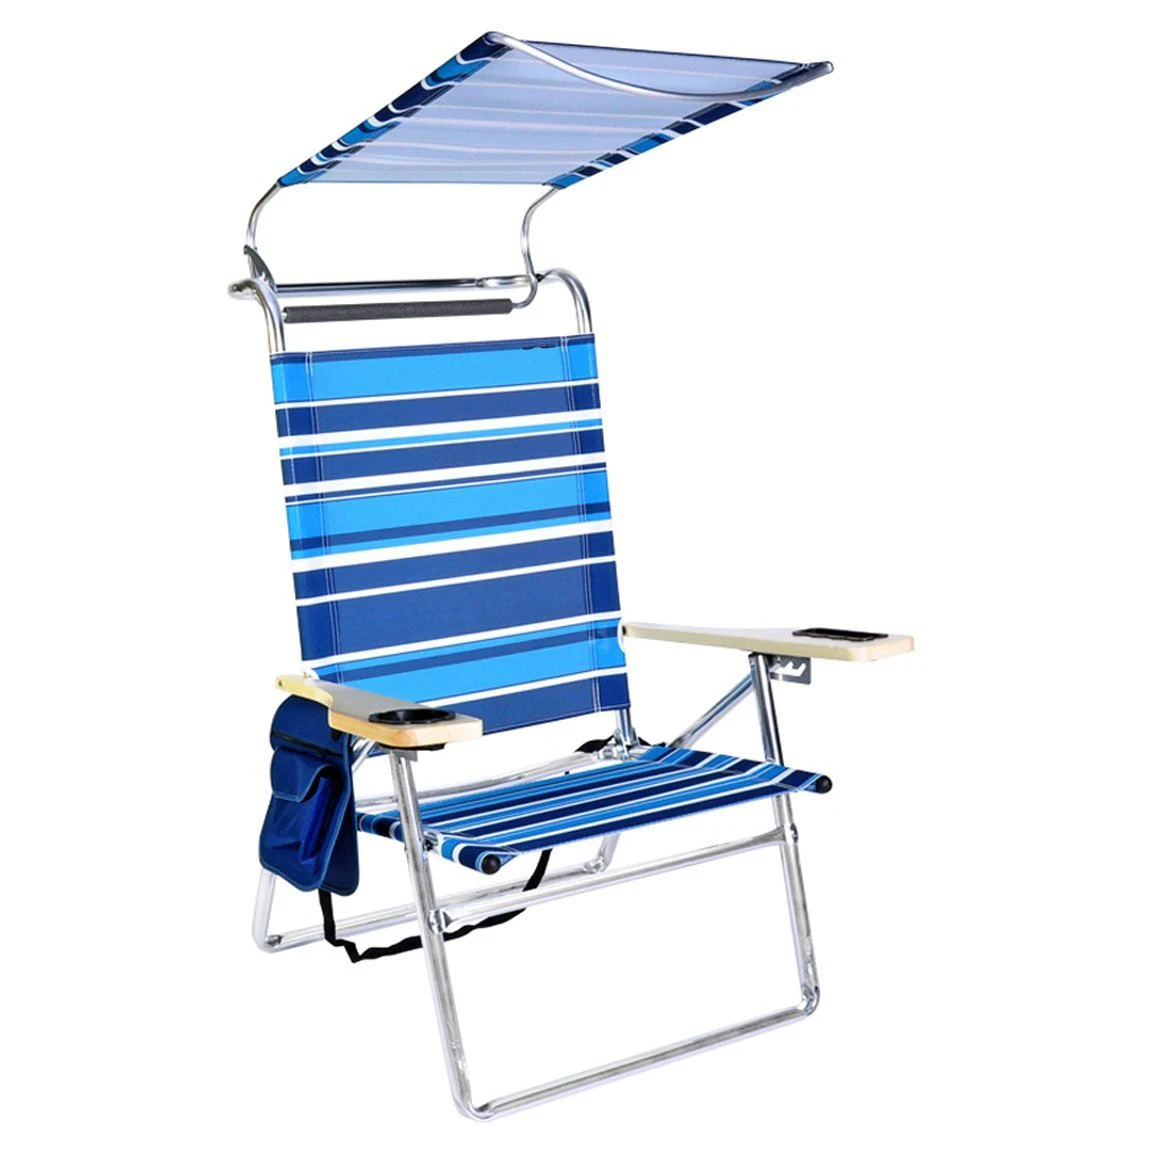 Deluxe 4 Position Beach Chair Lounge Aluminum Lounger Folding Camping Outdoor Garden Sun Roof Shade Patio Beach With Canopy Buy Beach Lounge Chair With Canopy Folding Beach Chair With Sun Shade Folding Beach